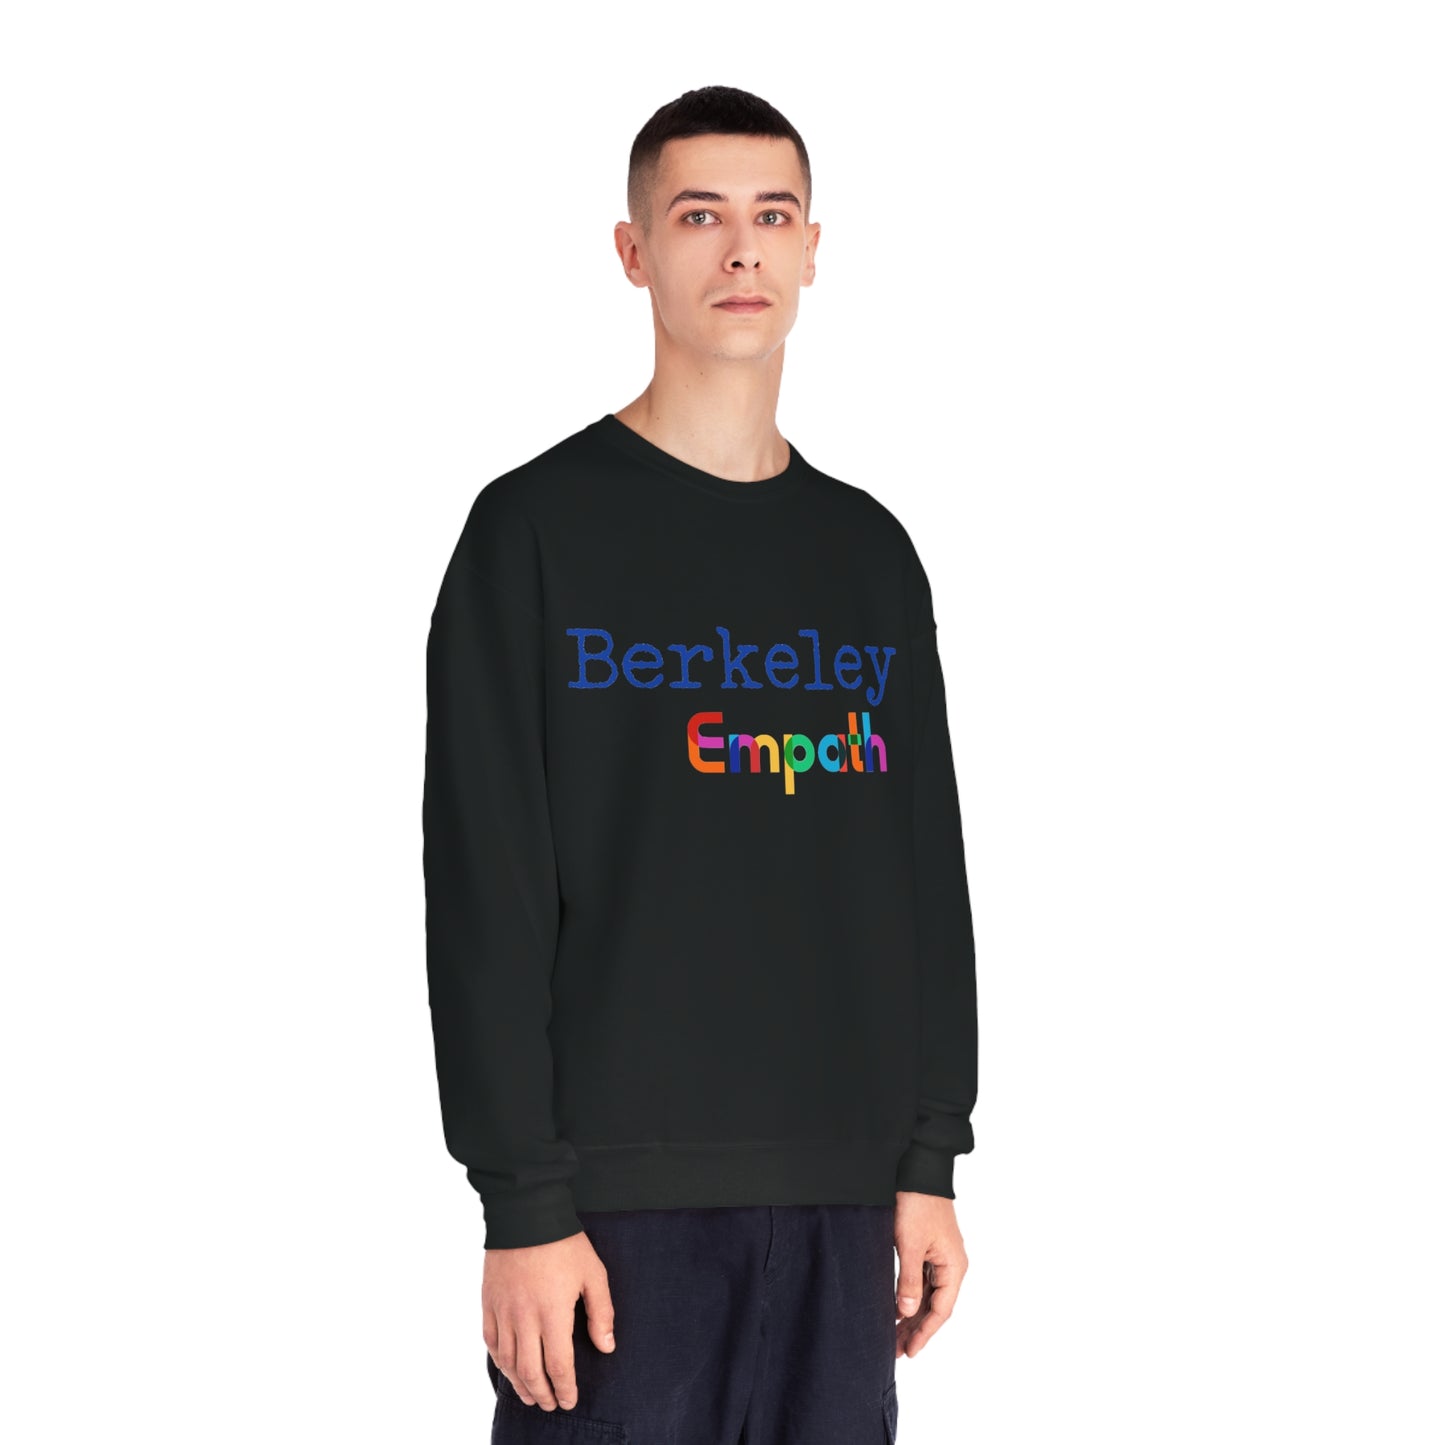 Berkeley Empath Unisex NuBlend Crewneck Sweatshirt